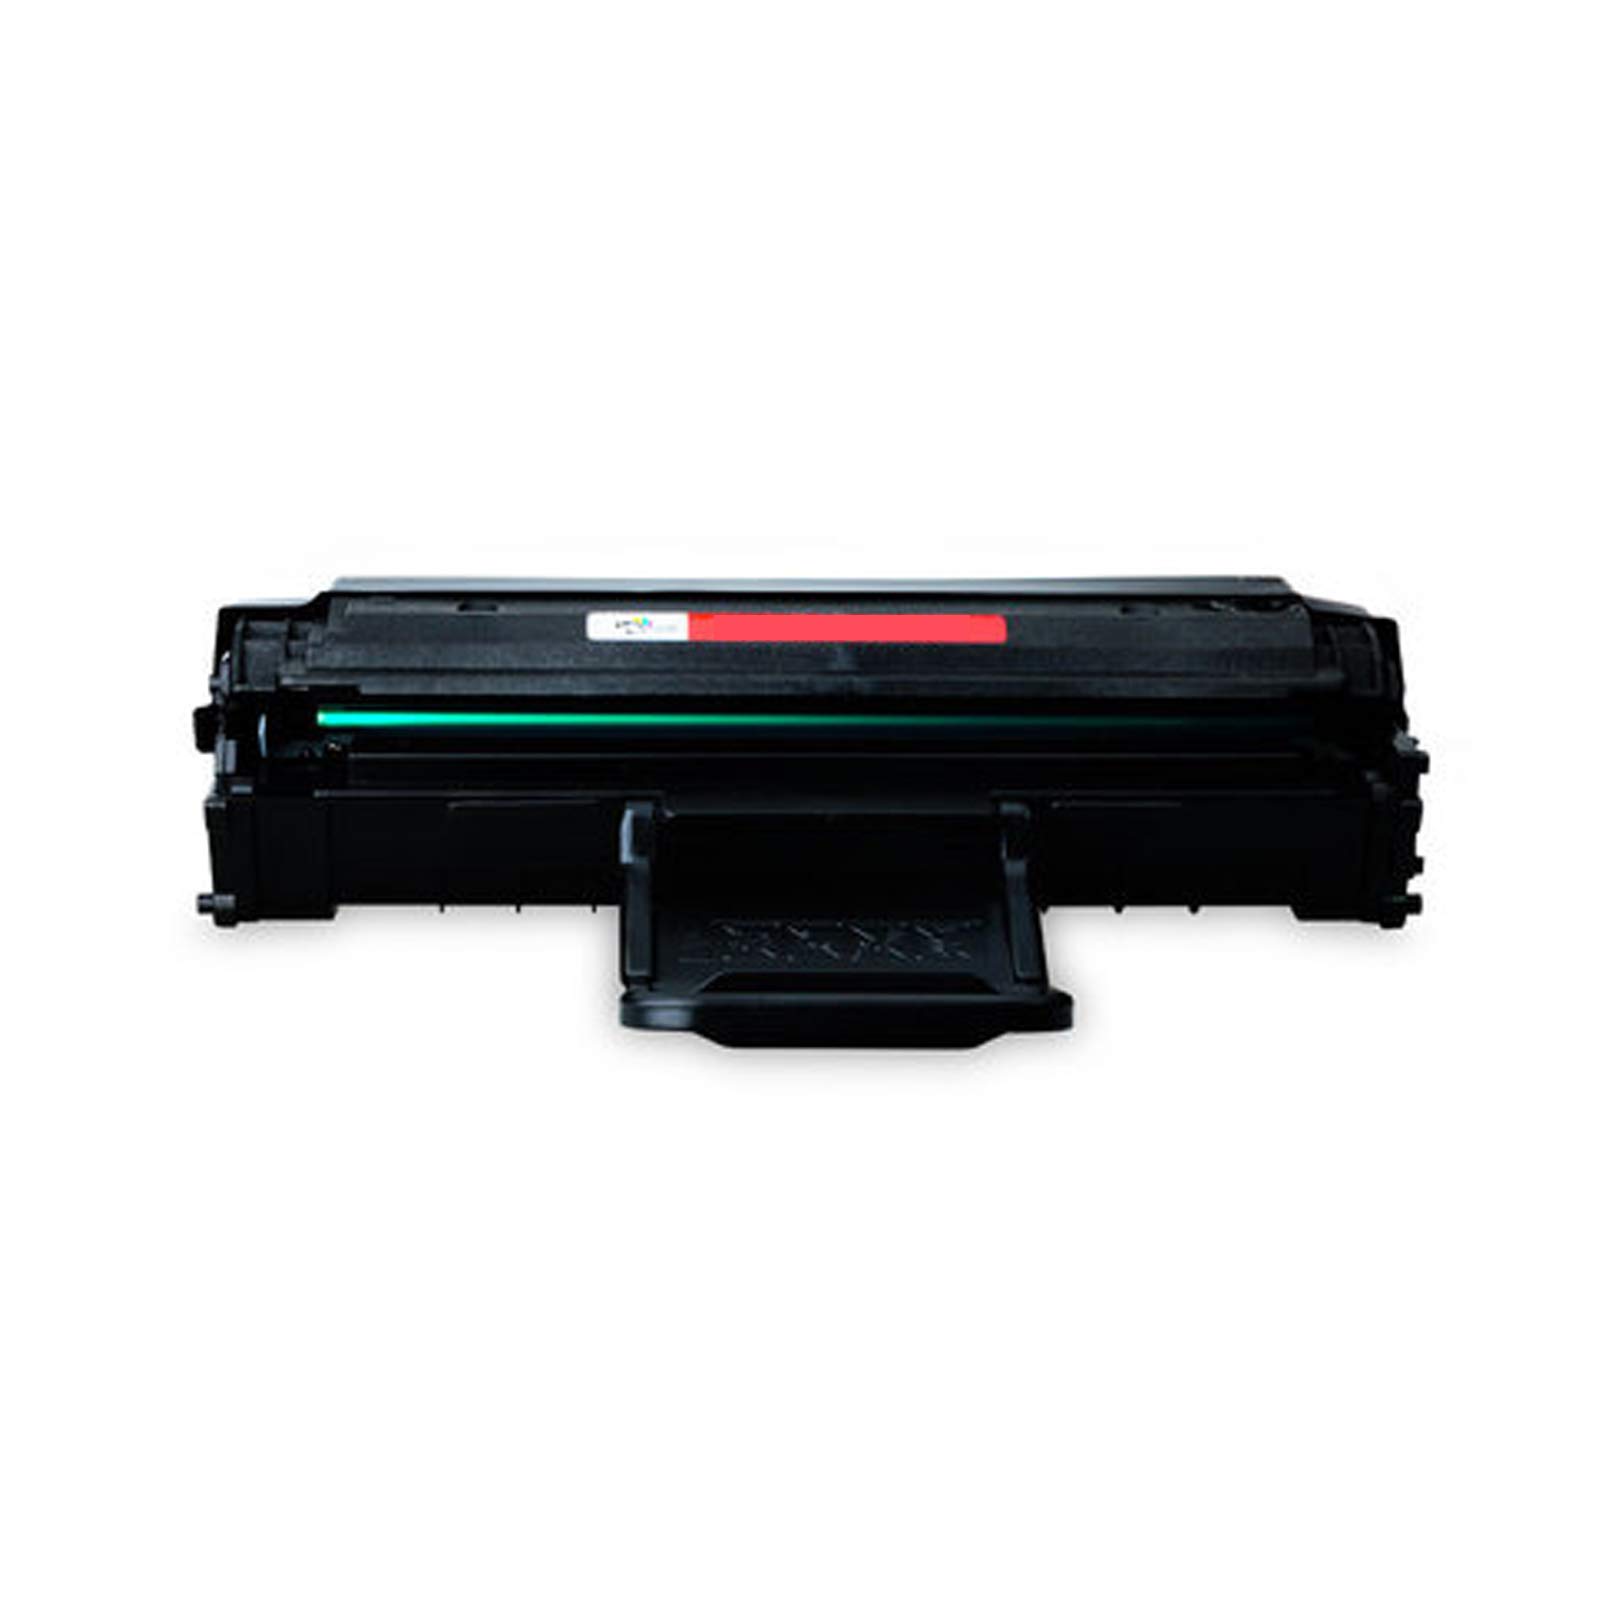 Samsung ML-2241 Laser Printer series